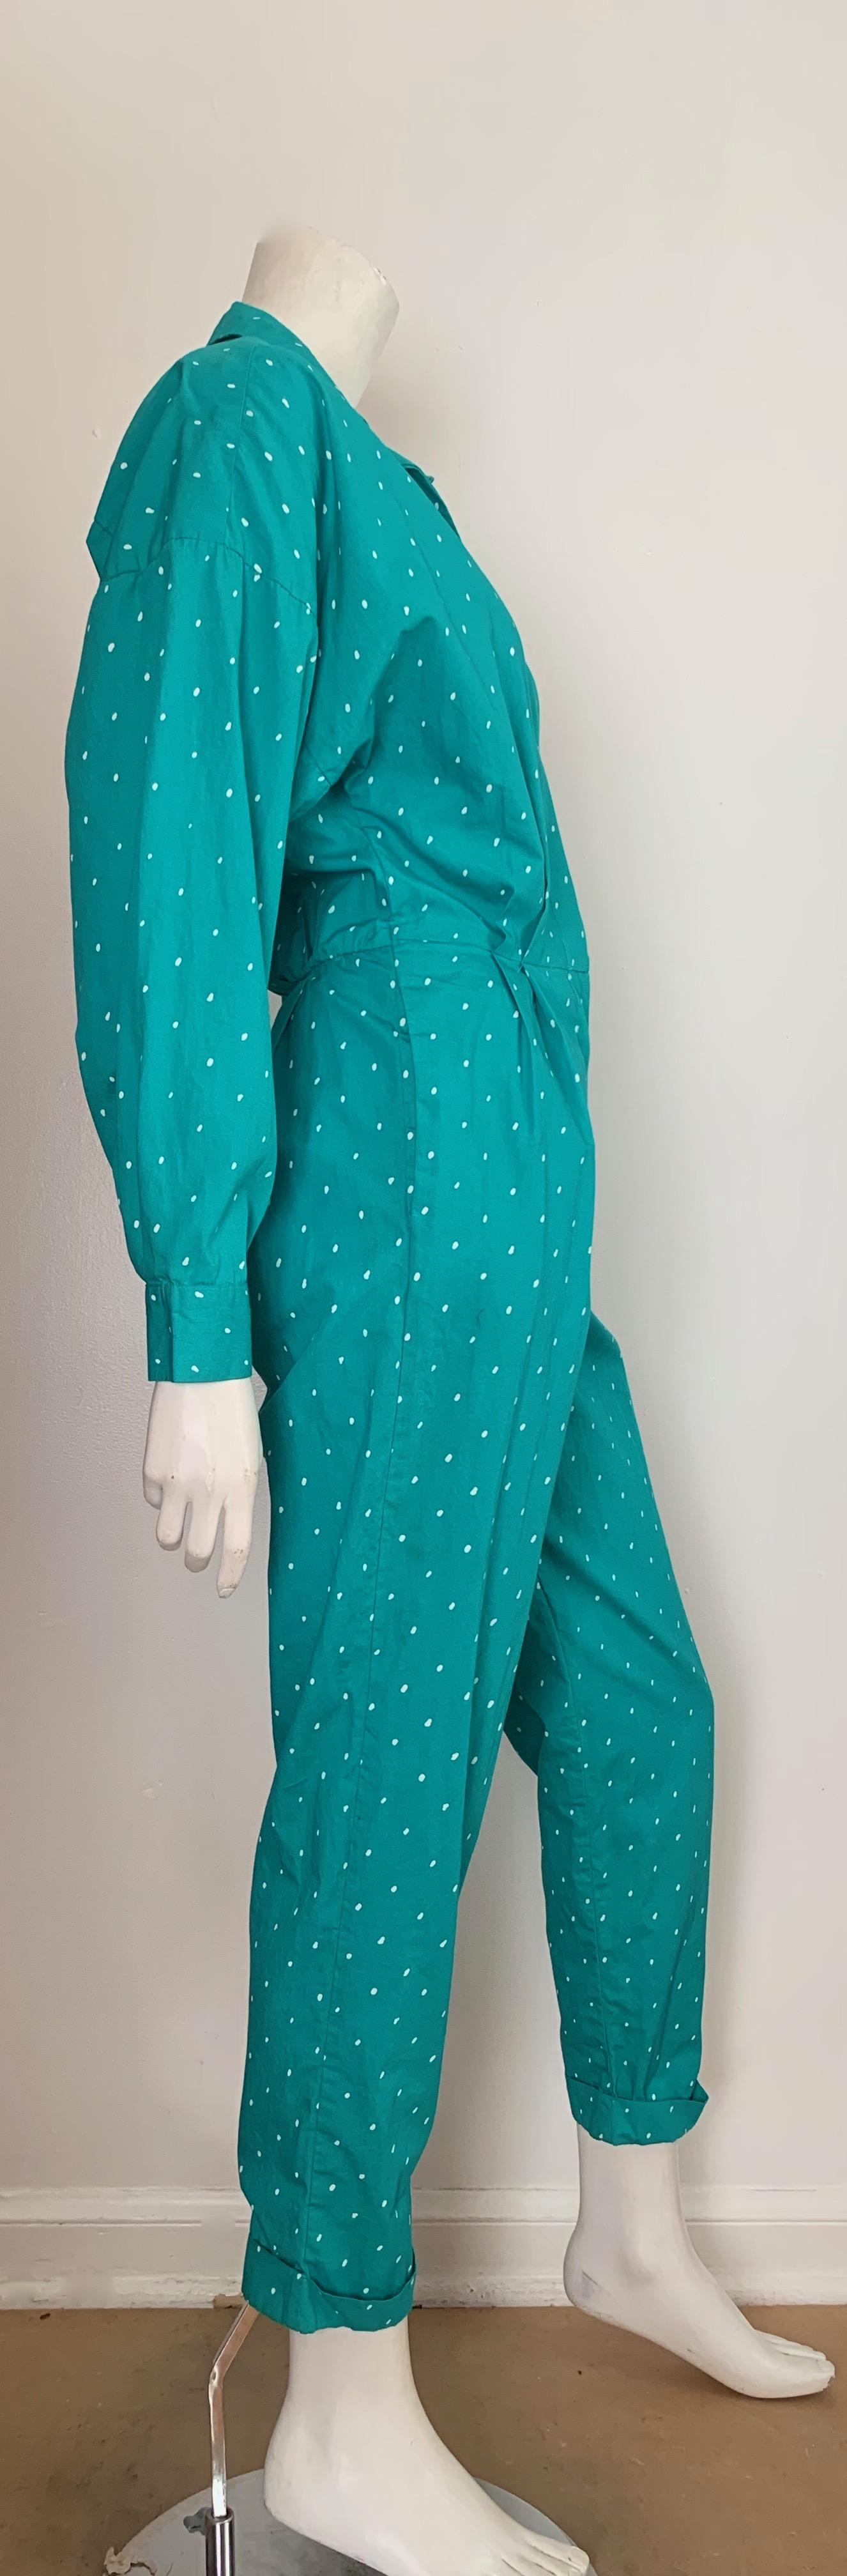 Saint Germain 1980s Cotton Polka Dot Jumpsuit with Pockets Size 4.  3